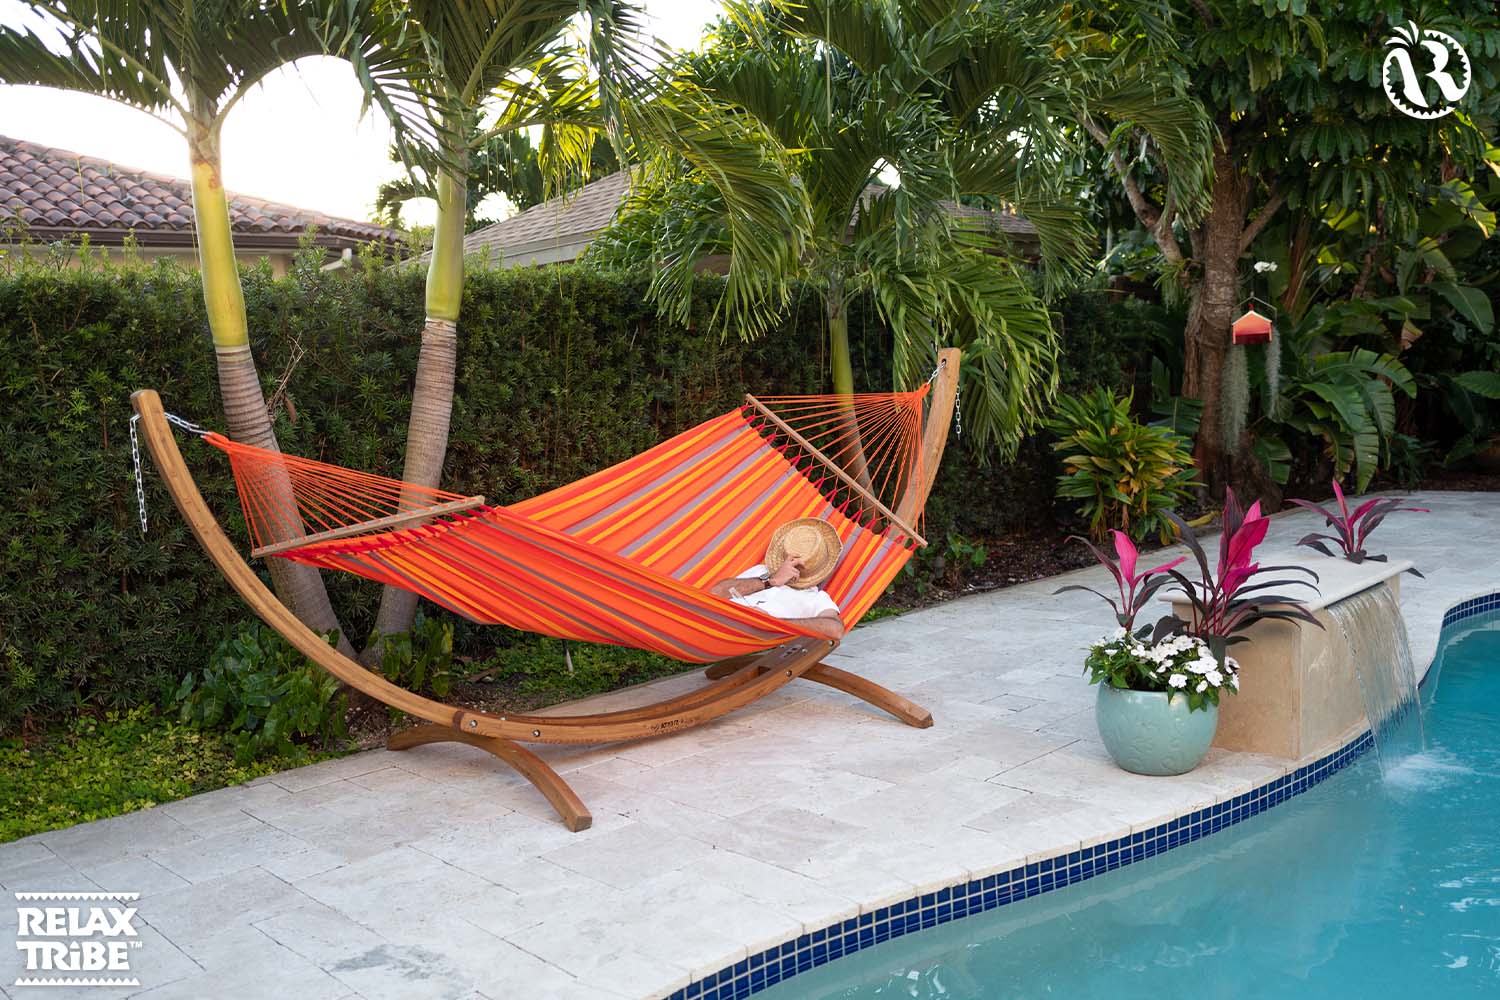 alisio-toucan-weatherproof-hammock-with-bars-fsc-wood-home-garden-handmade-multicolor-orange-wood-stand-pool-patio